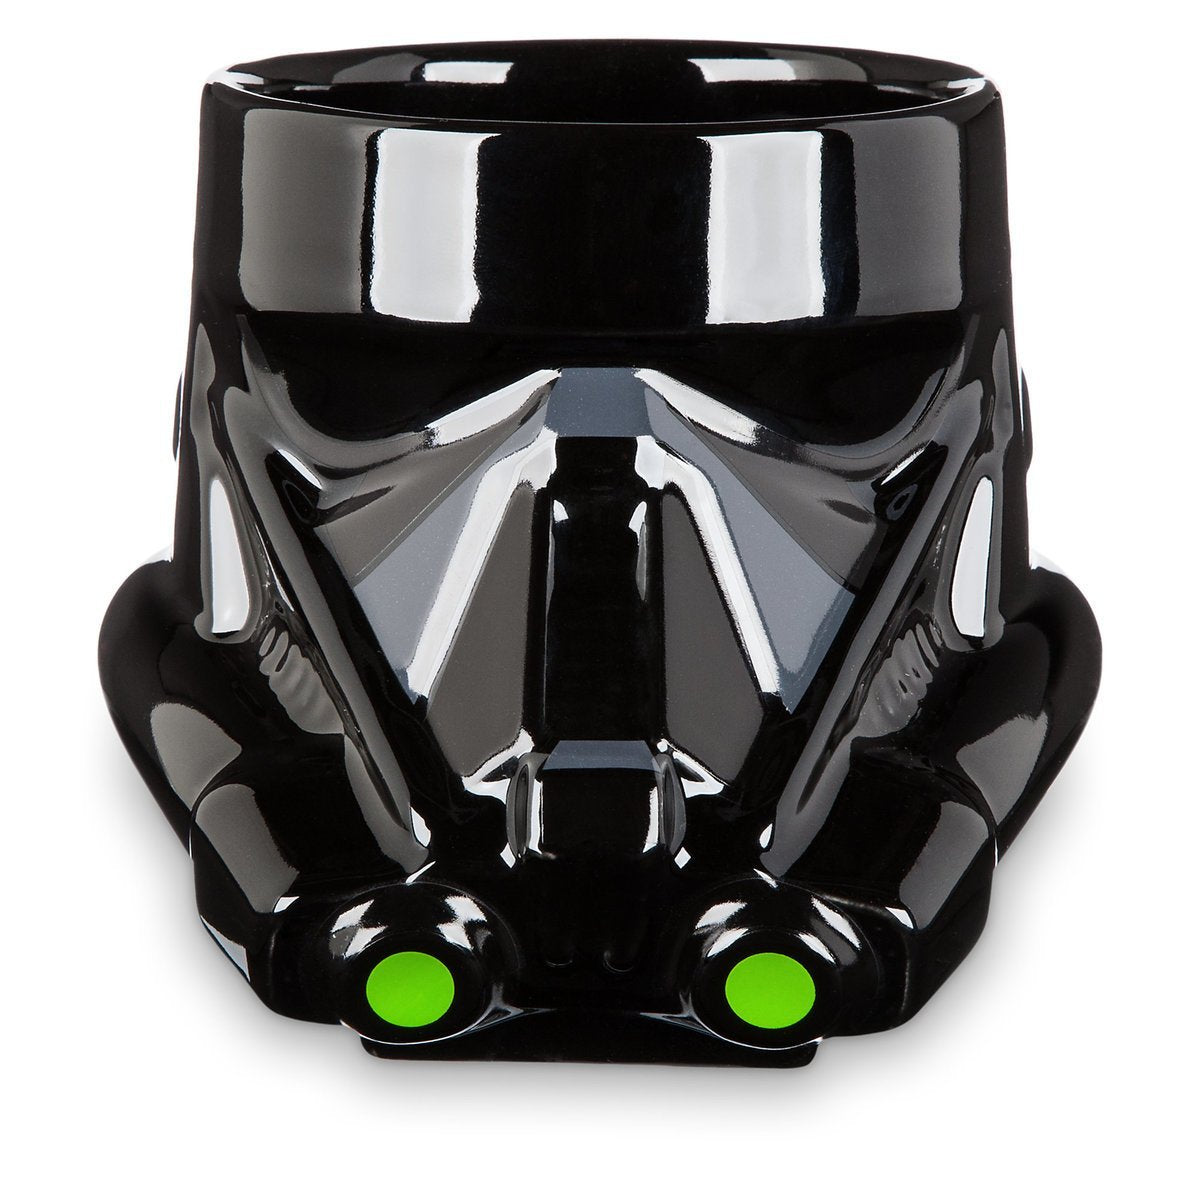 Stormtrooper Mug